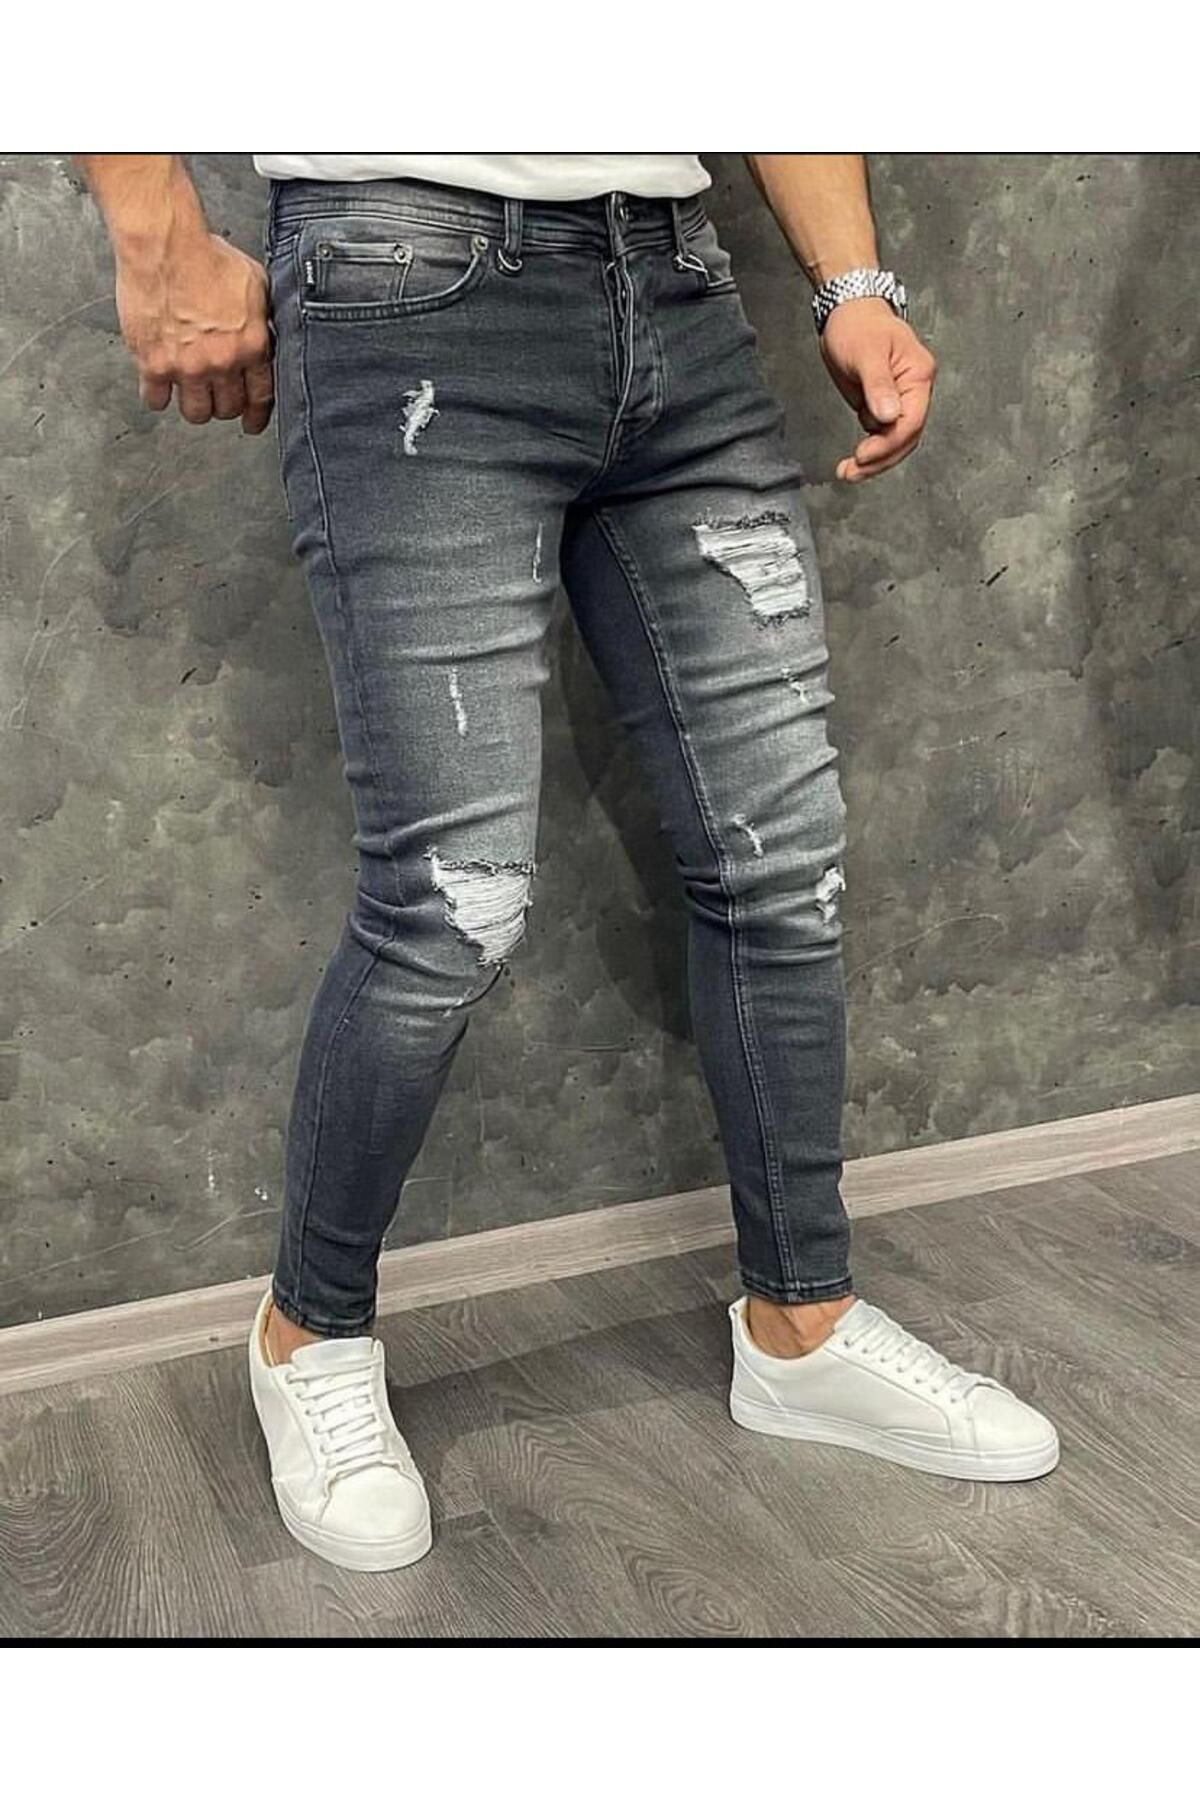 Retro 7MANCOLLECTION Erkek Slim Fit Füme Likralı Jeans Kot Pantolon